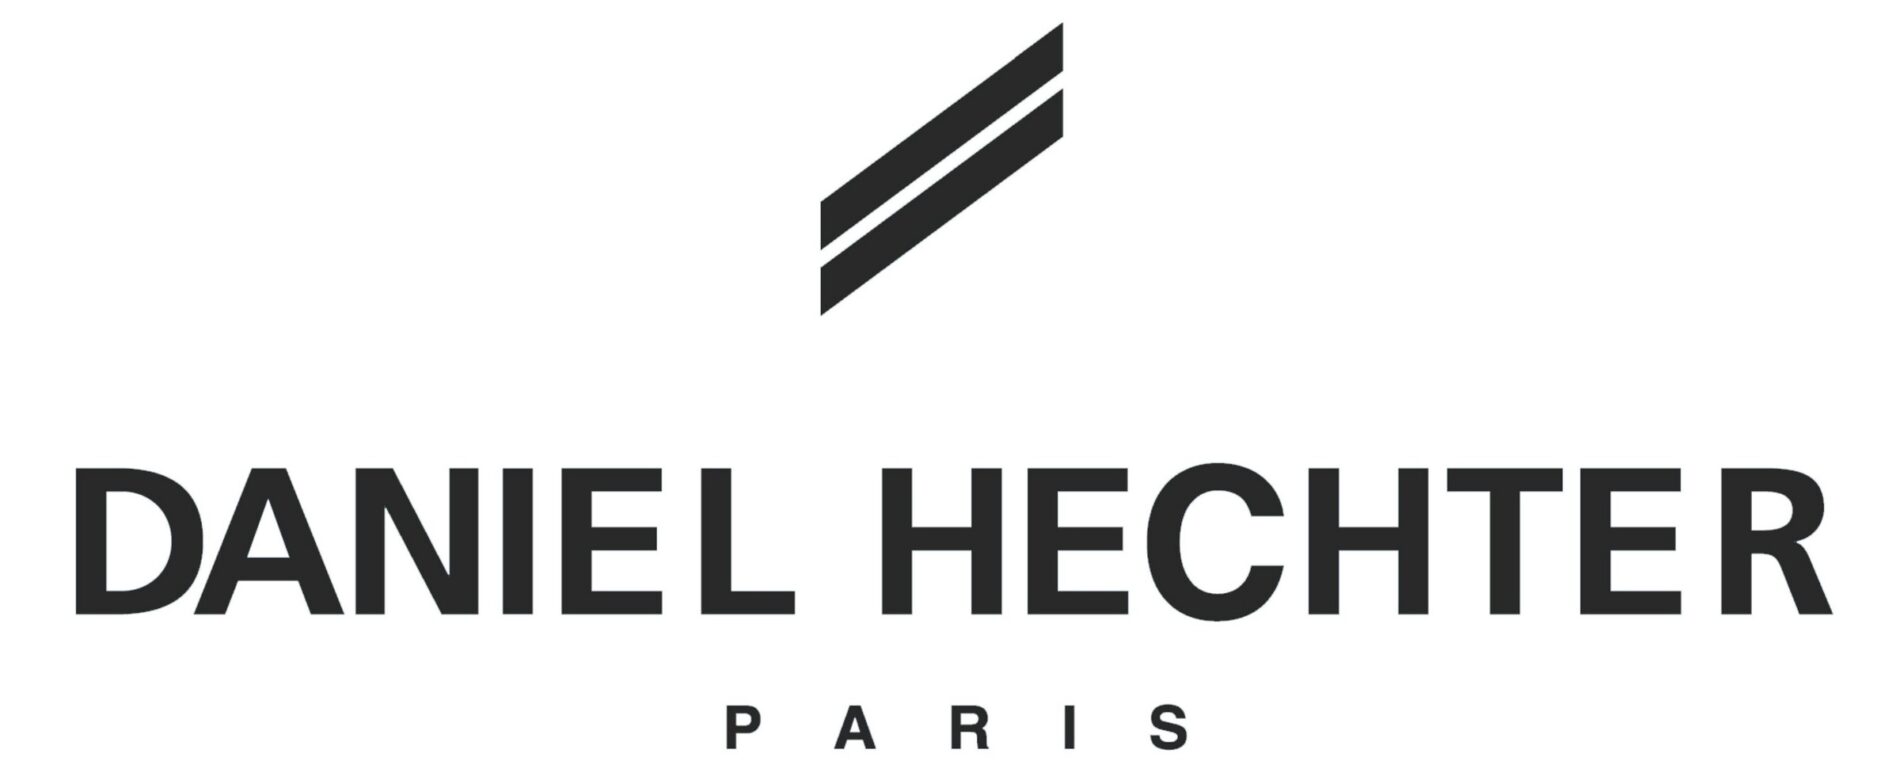 Daniel Hechter Logo 1 Scaled